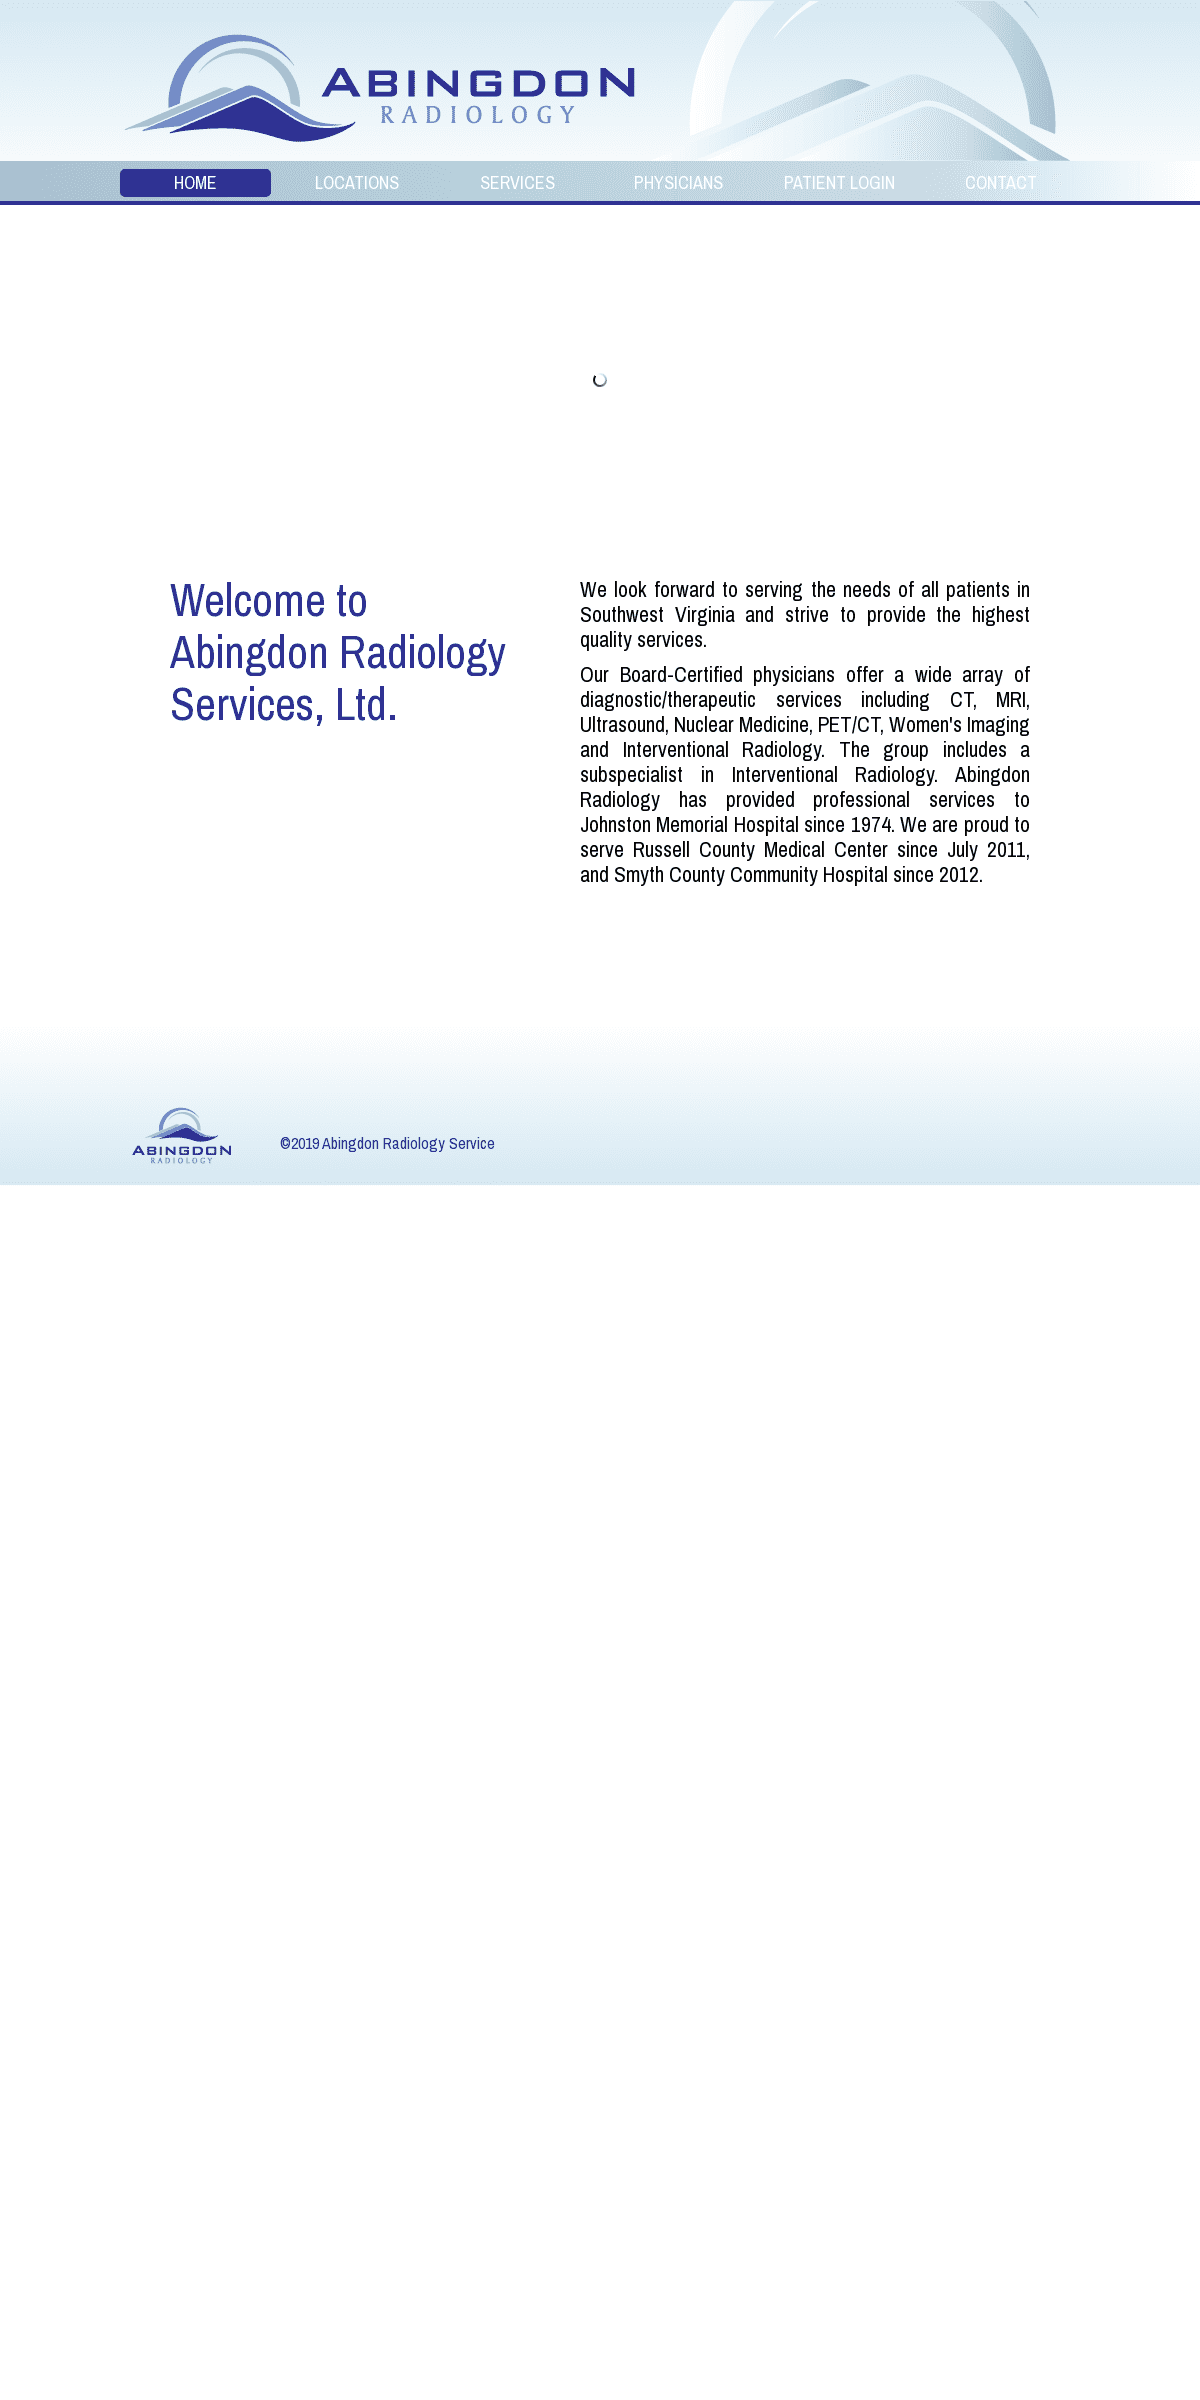 A complete backup of abingdonrad.com